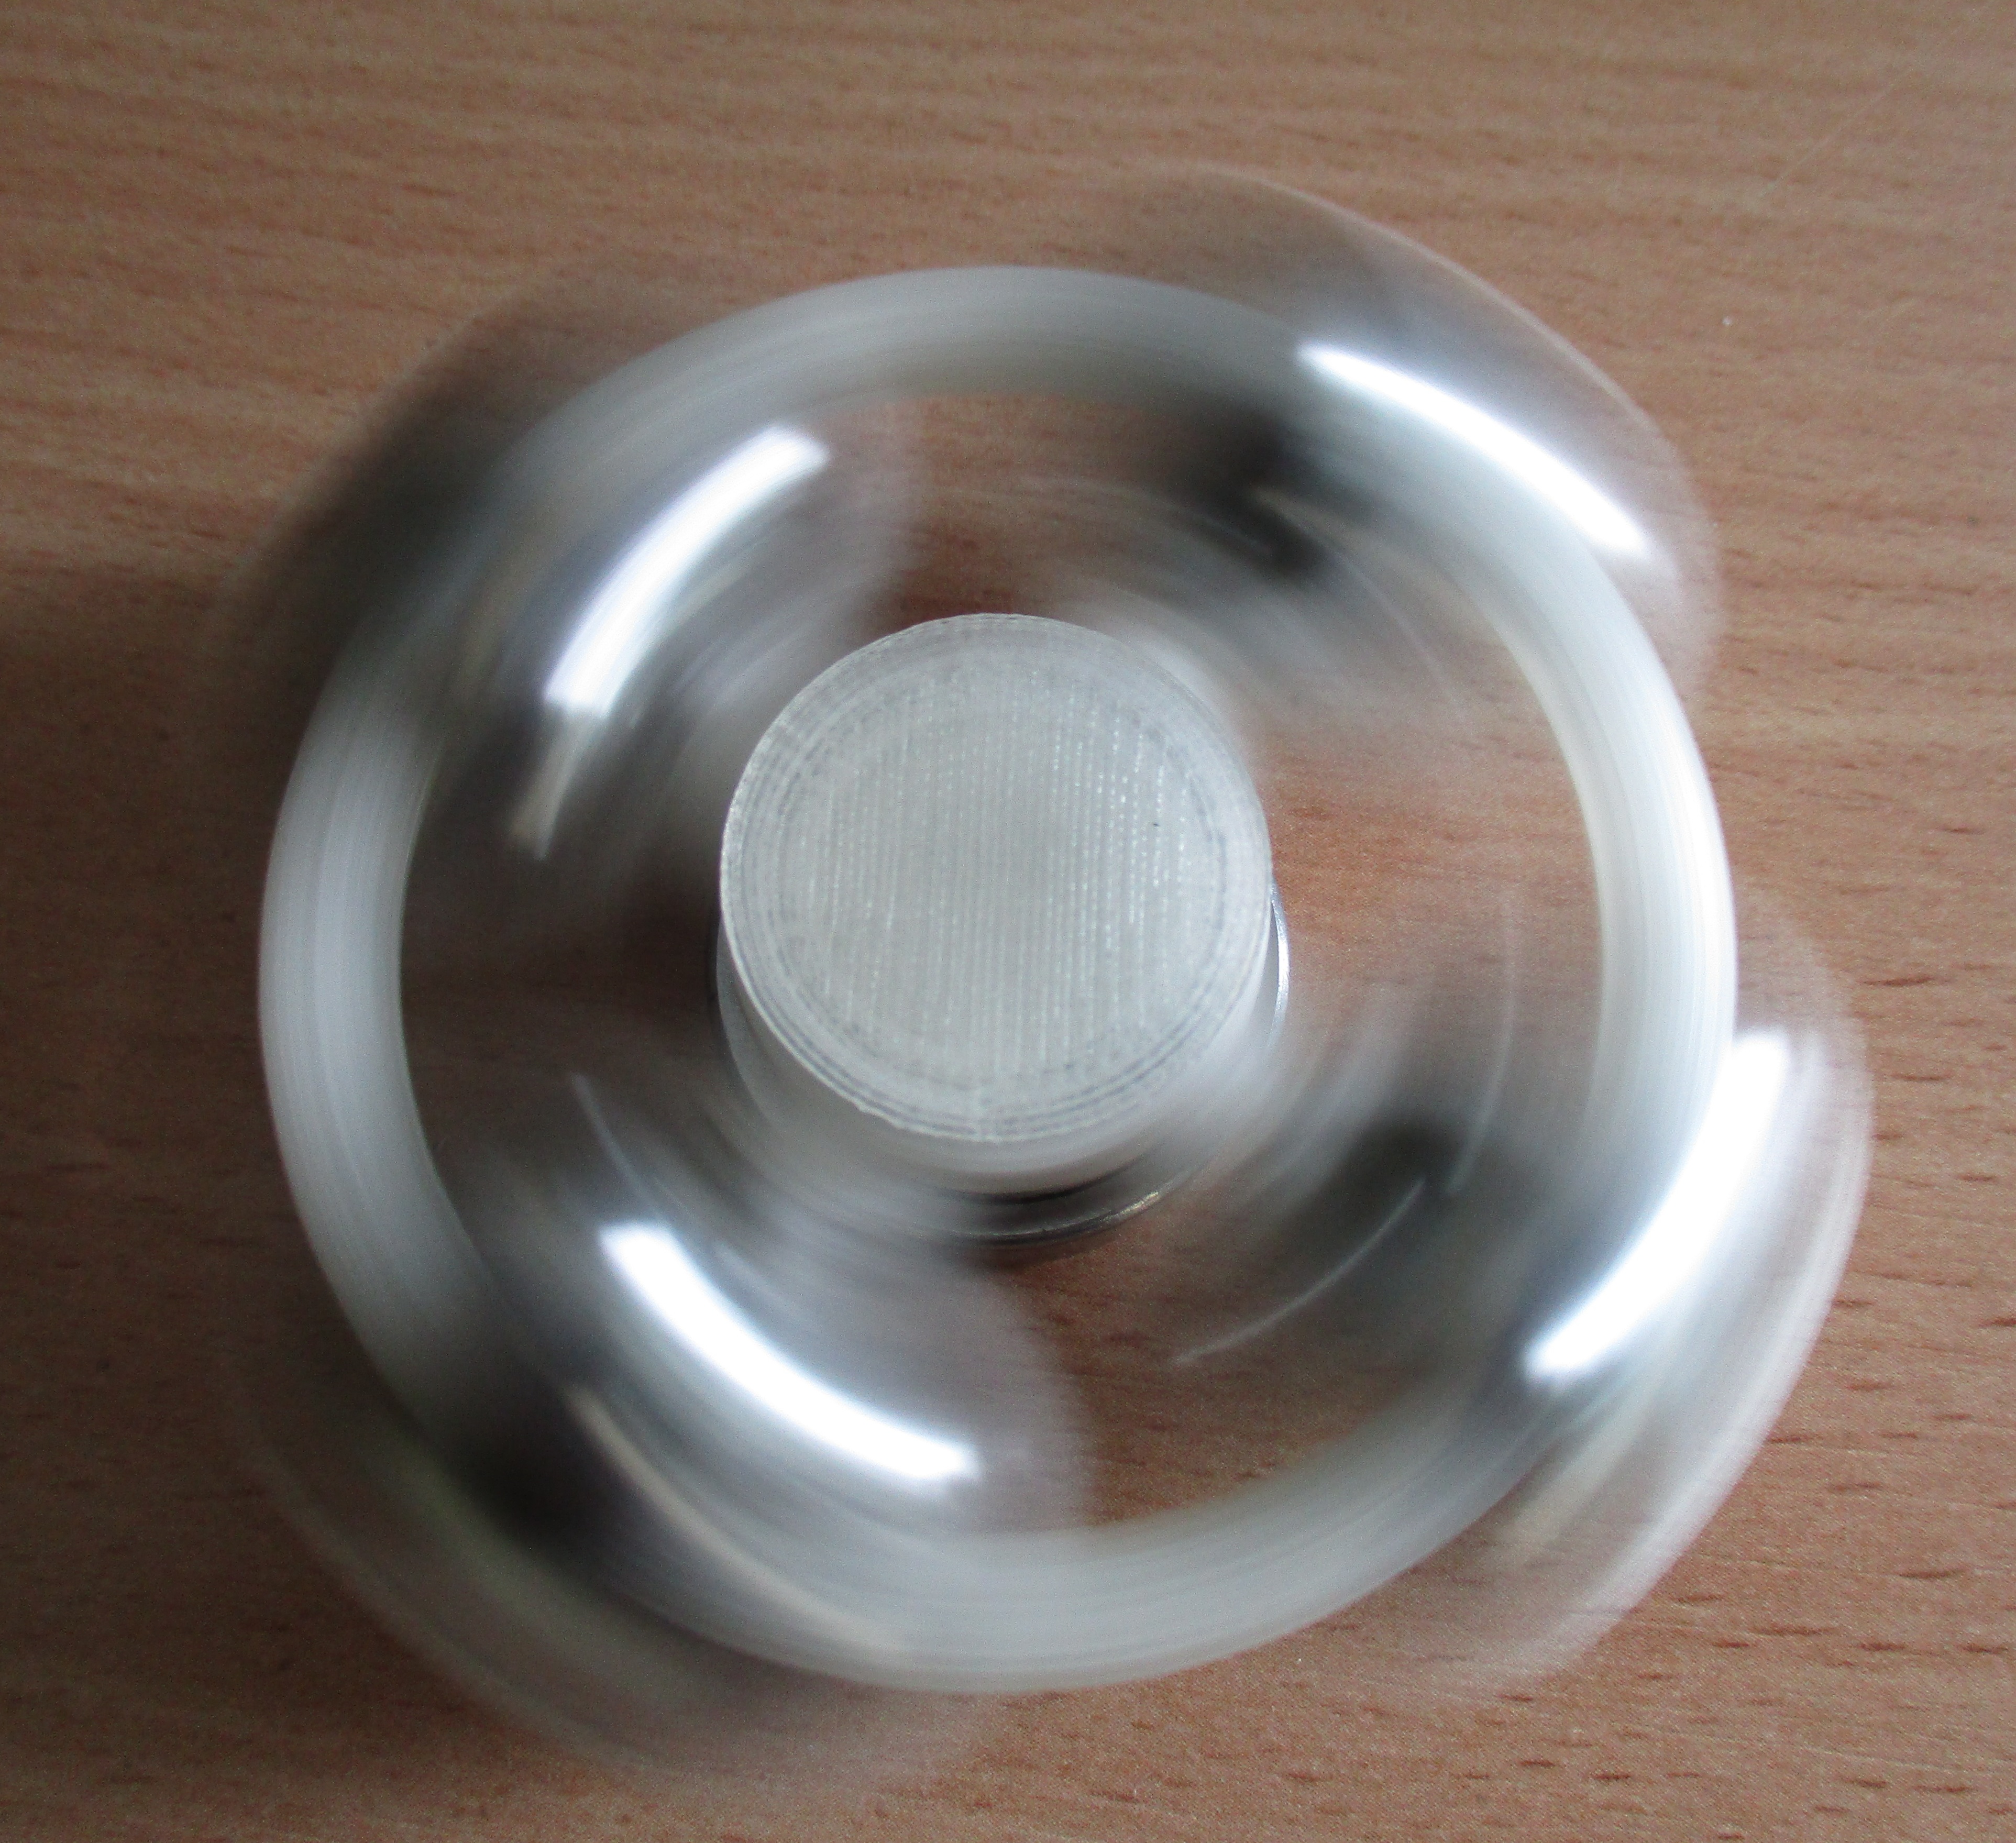 Fidget spinner with balls